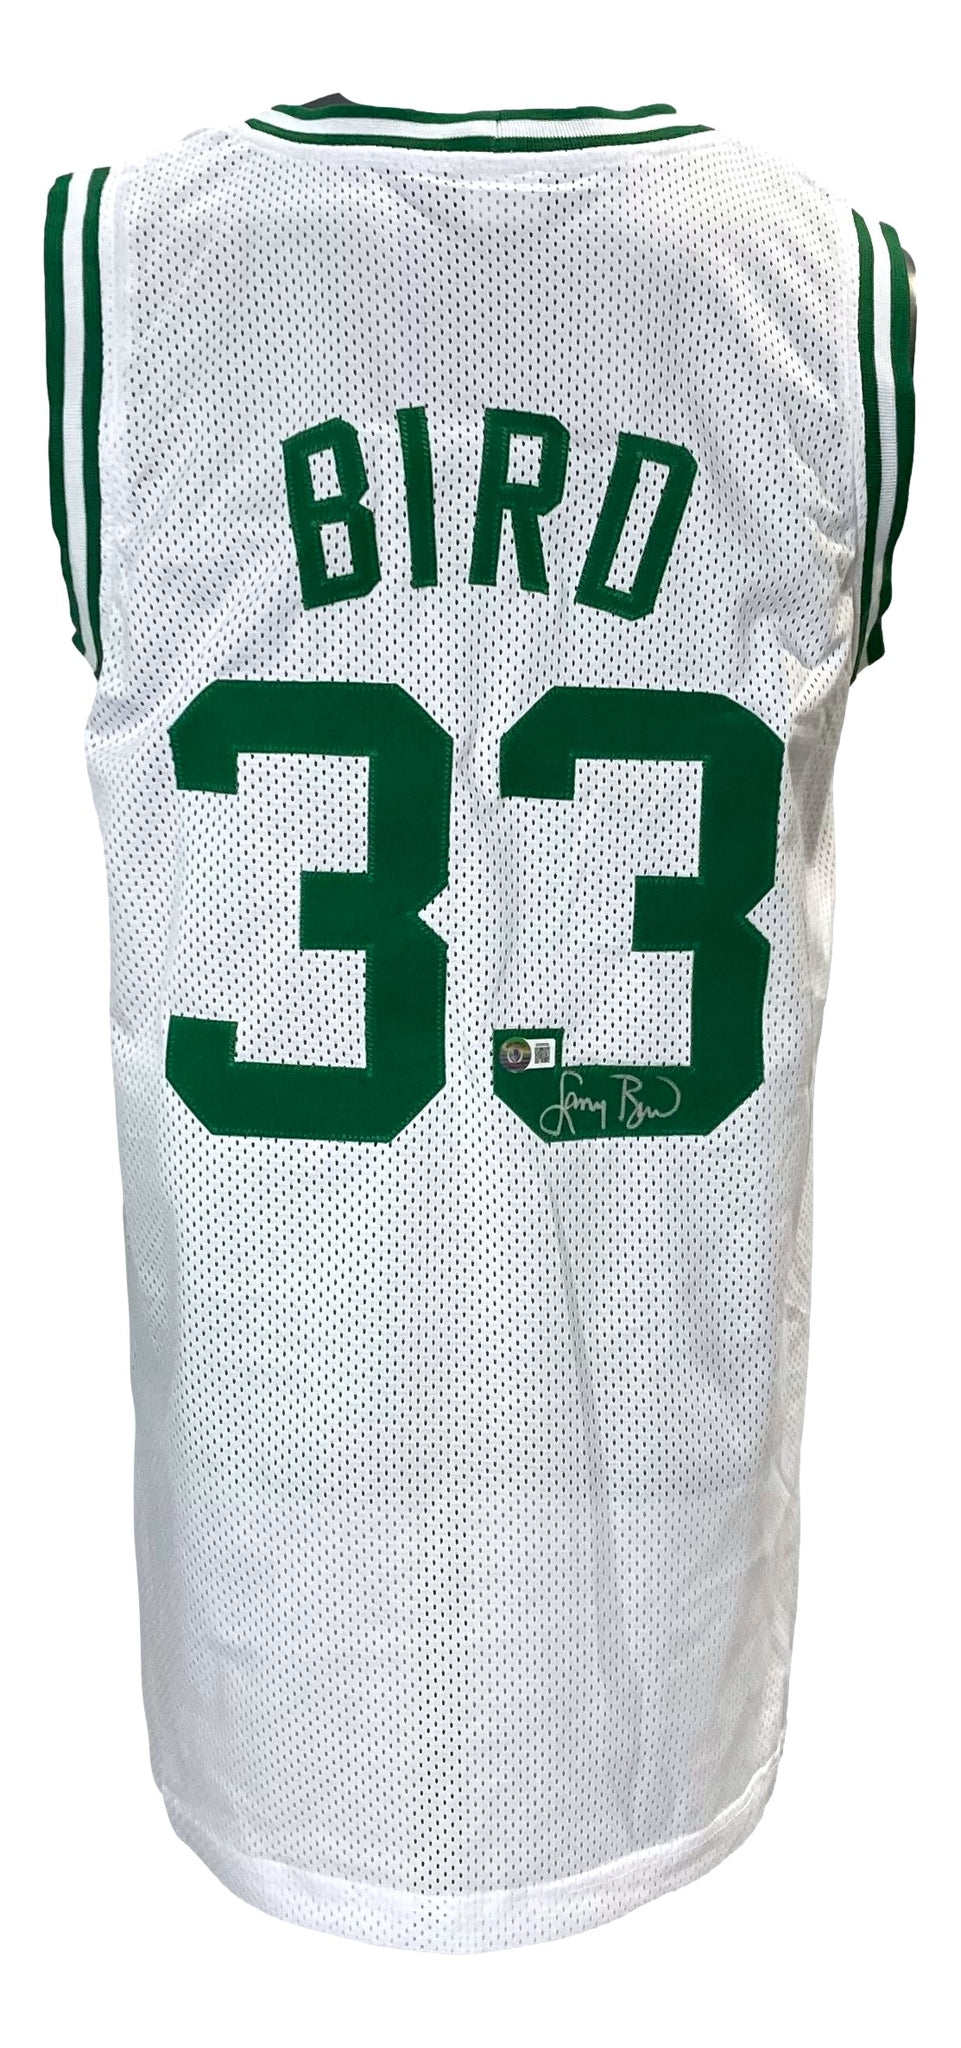 Milwaukee Bucks Giannis Antetokounmpo Autographed Green Nike Jersey Size XXL Beckett BAS